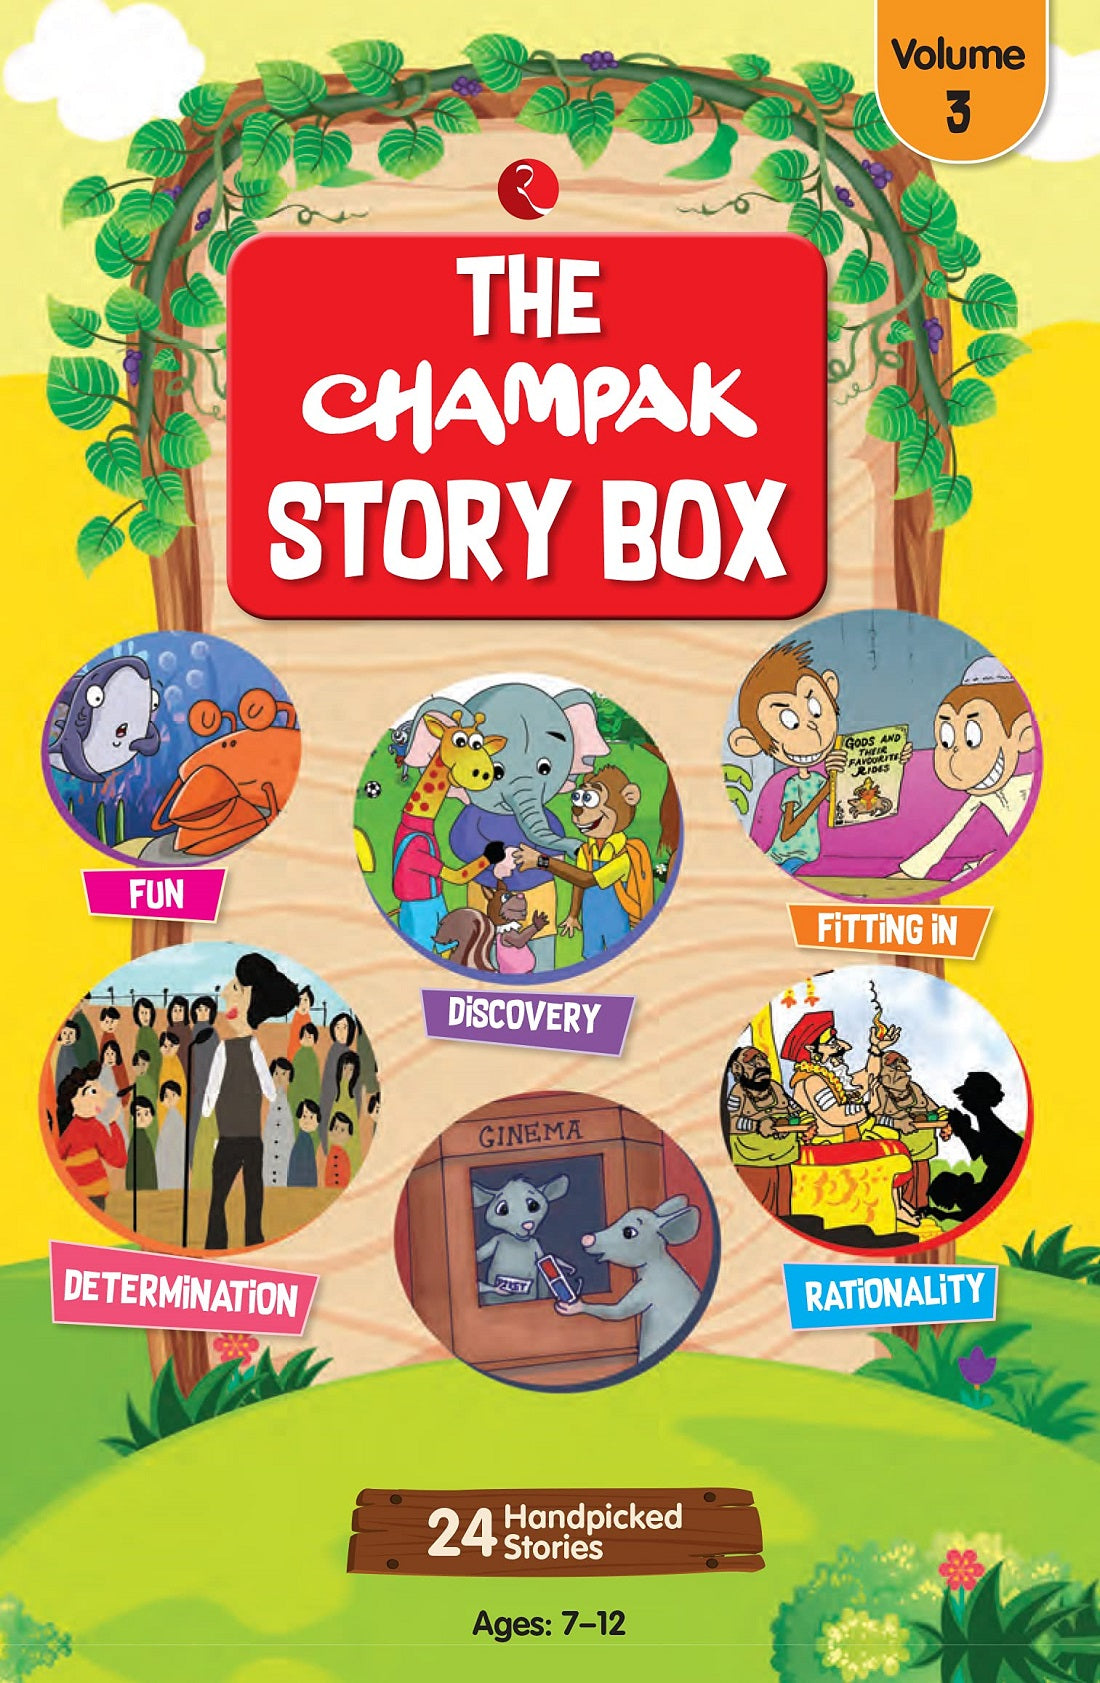 THE CHAMPAK STORY BOX VOL 3